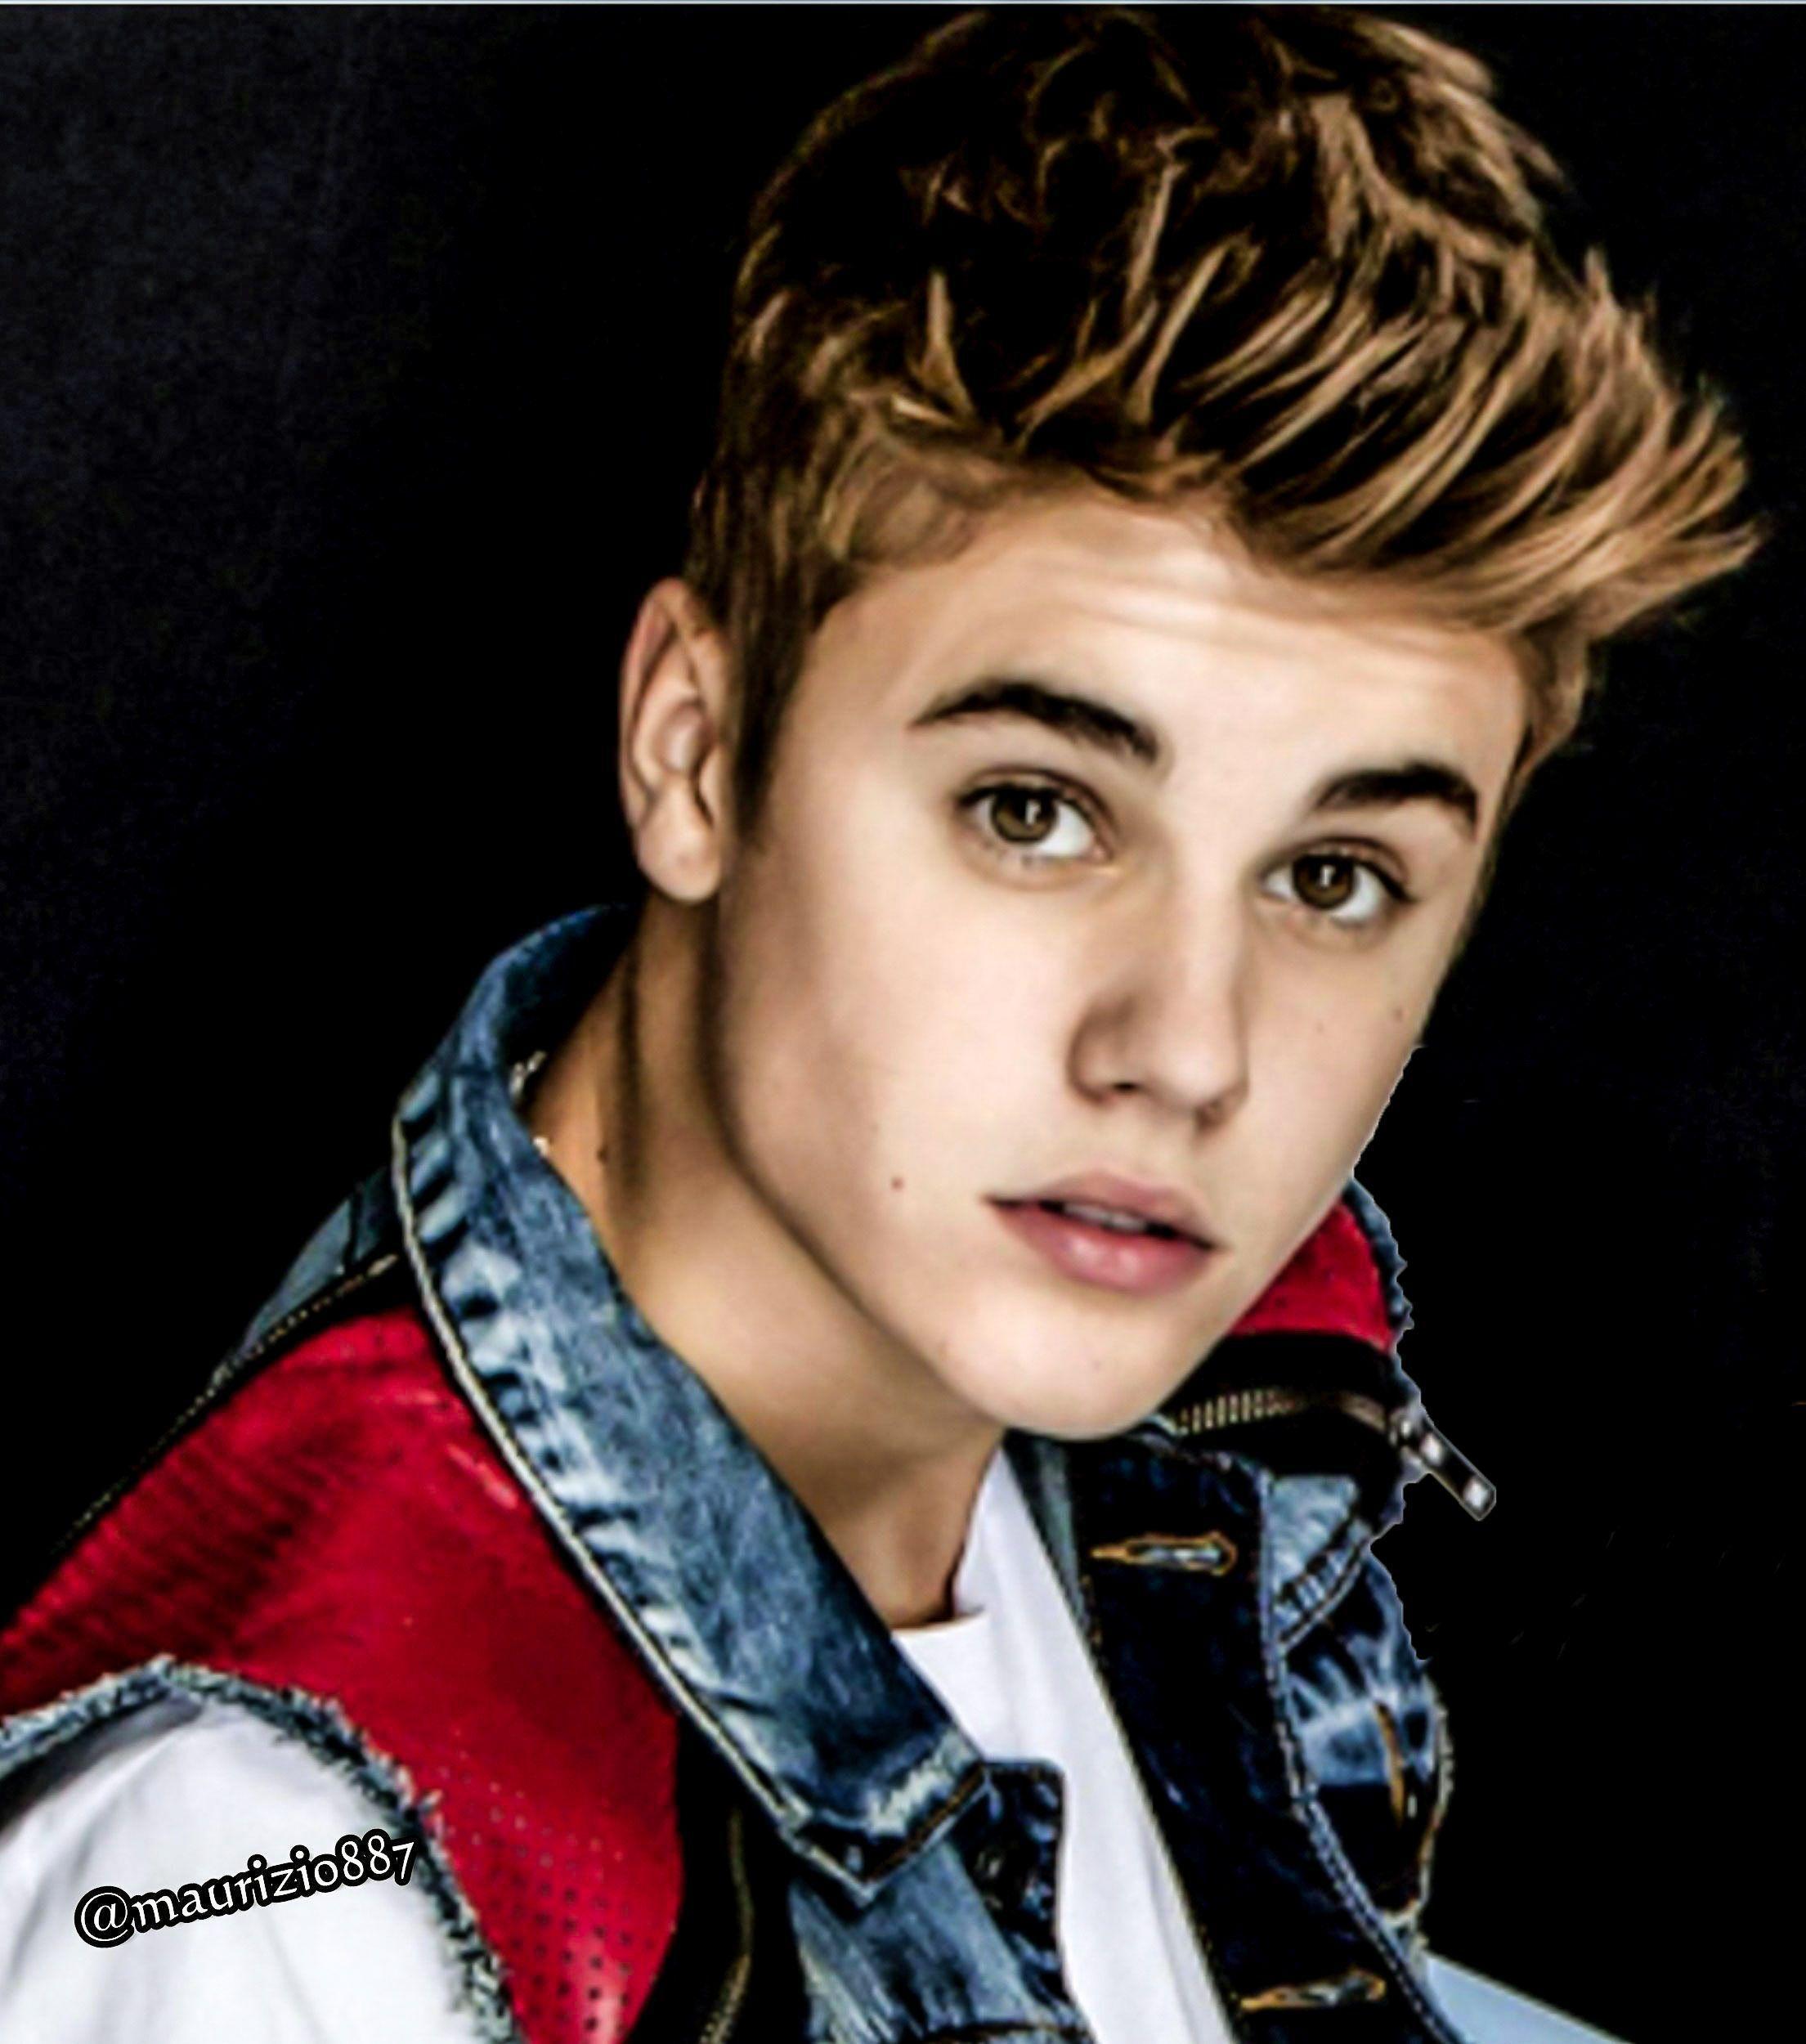 Justin Bieber Wallpapers HD 2015 - Wallpaper Cave